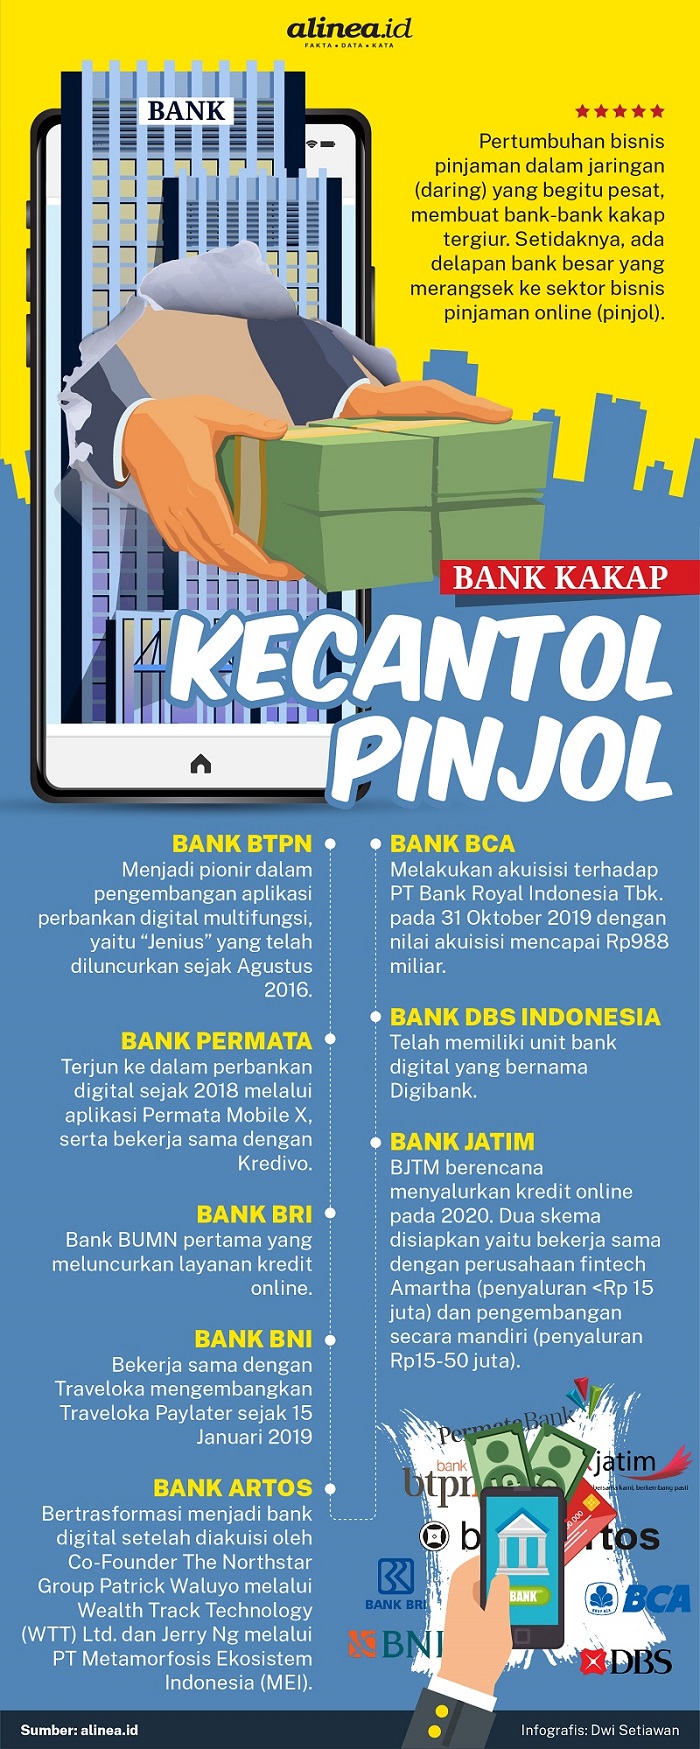 Infografik bank-bank raksasa kepincut bisnis pinjaman online. Alinea.id/Dwi Setiawan